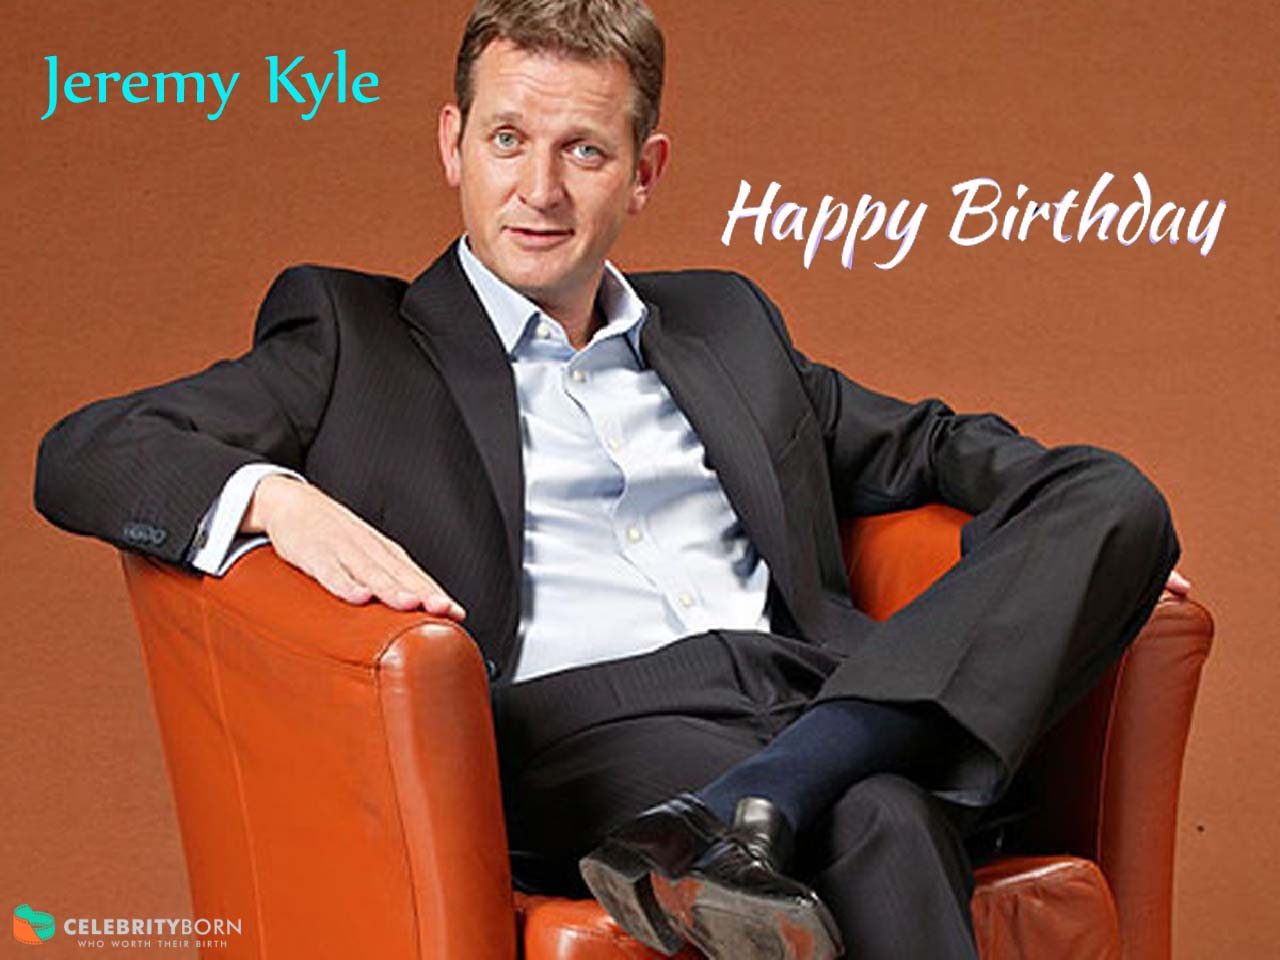 Celebrity Born on Twitter: "Happy Birthday to Jeremy Kyle (English Radio Host &amp; Television Presenter) #JeremyKyle #radiohost #TelevisionPresenter #JeremyKyleBirthday About : https://t.co/lJP8ZWYE7A https://t.co/HFillRYR2J" / X